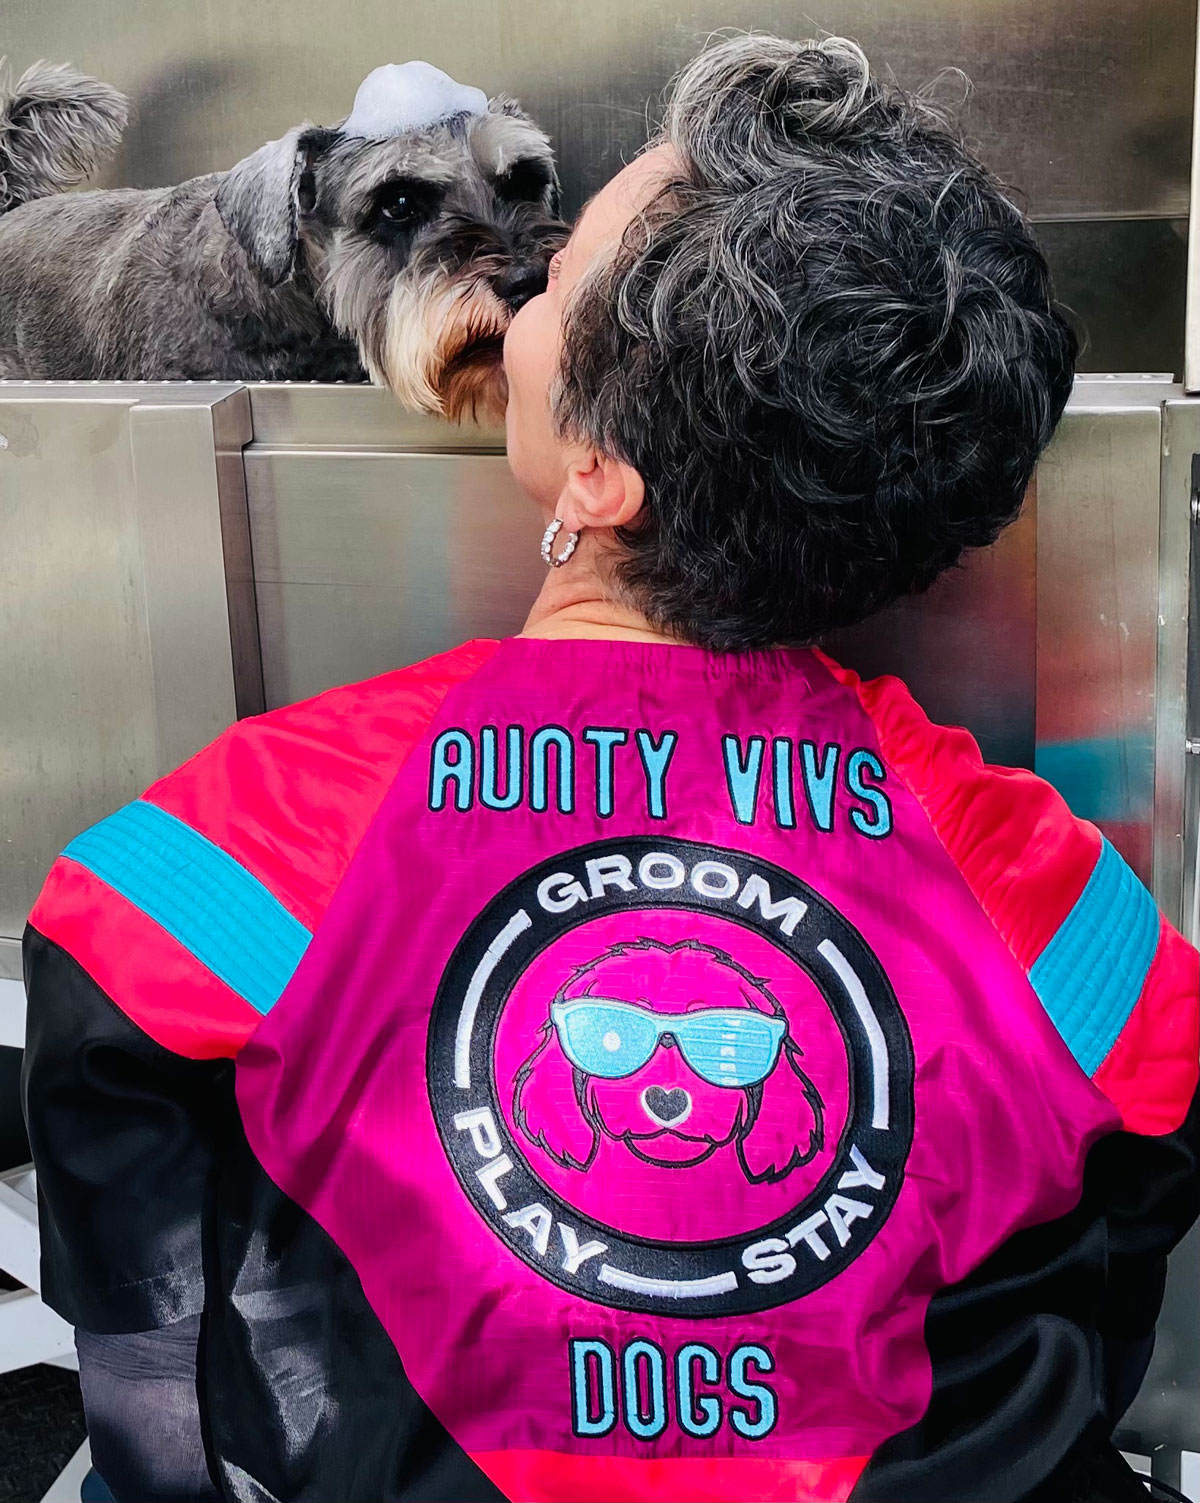 Aunty Vivs Dogs embroidered logo on jacket